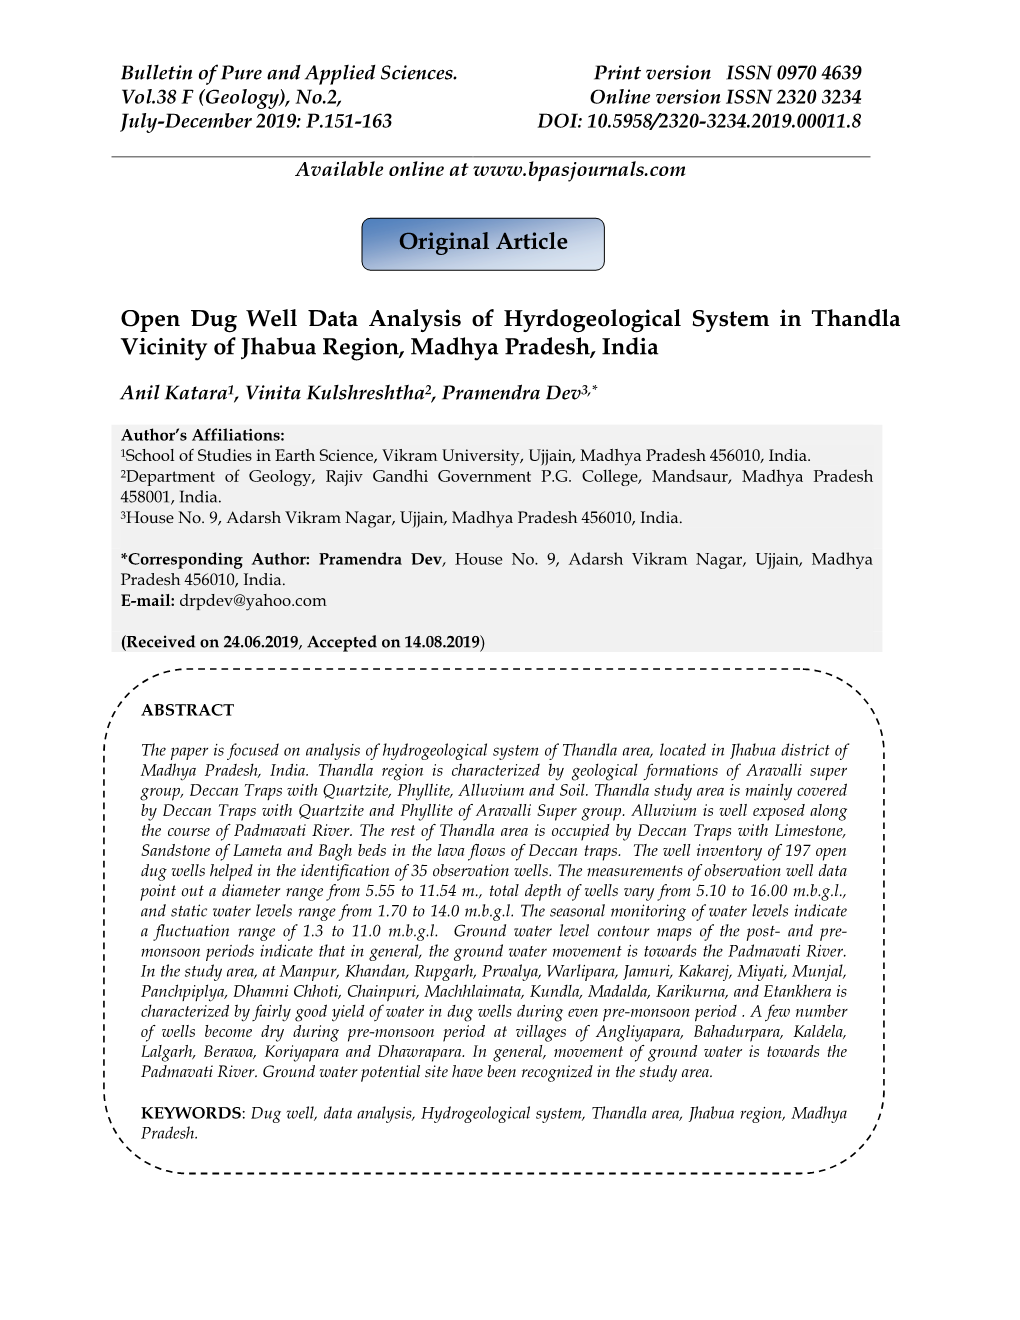 Open Dug Well Data Analysis of Hyrdogeological System in Thandla Vicinity of Jhabua Region, Madhya Pradesh, India